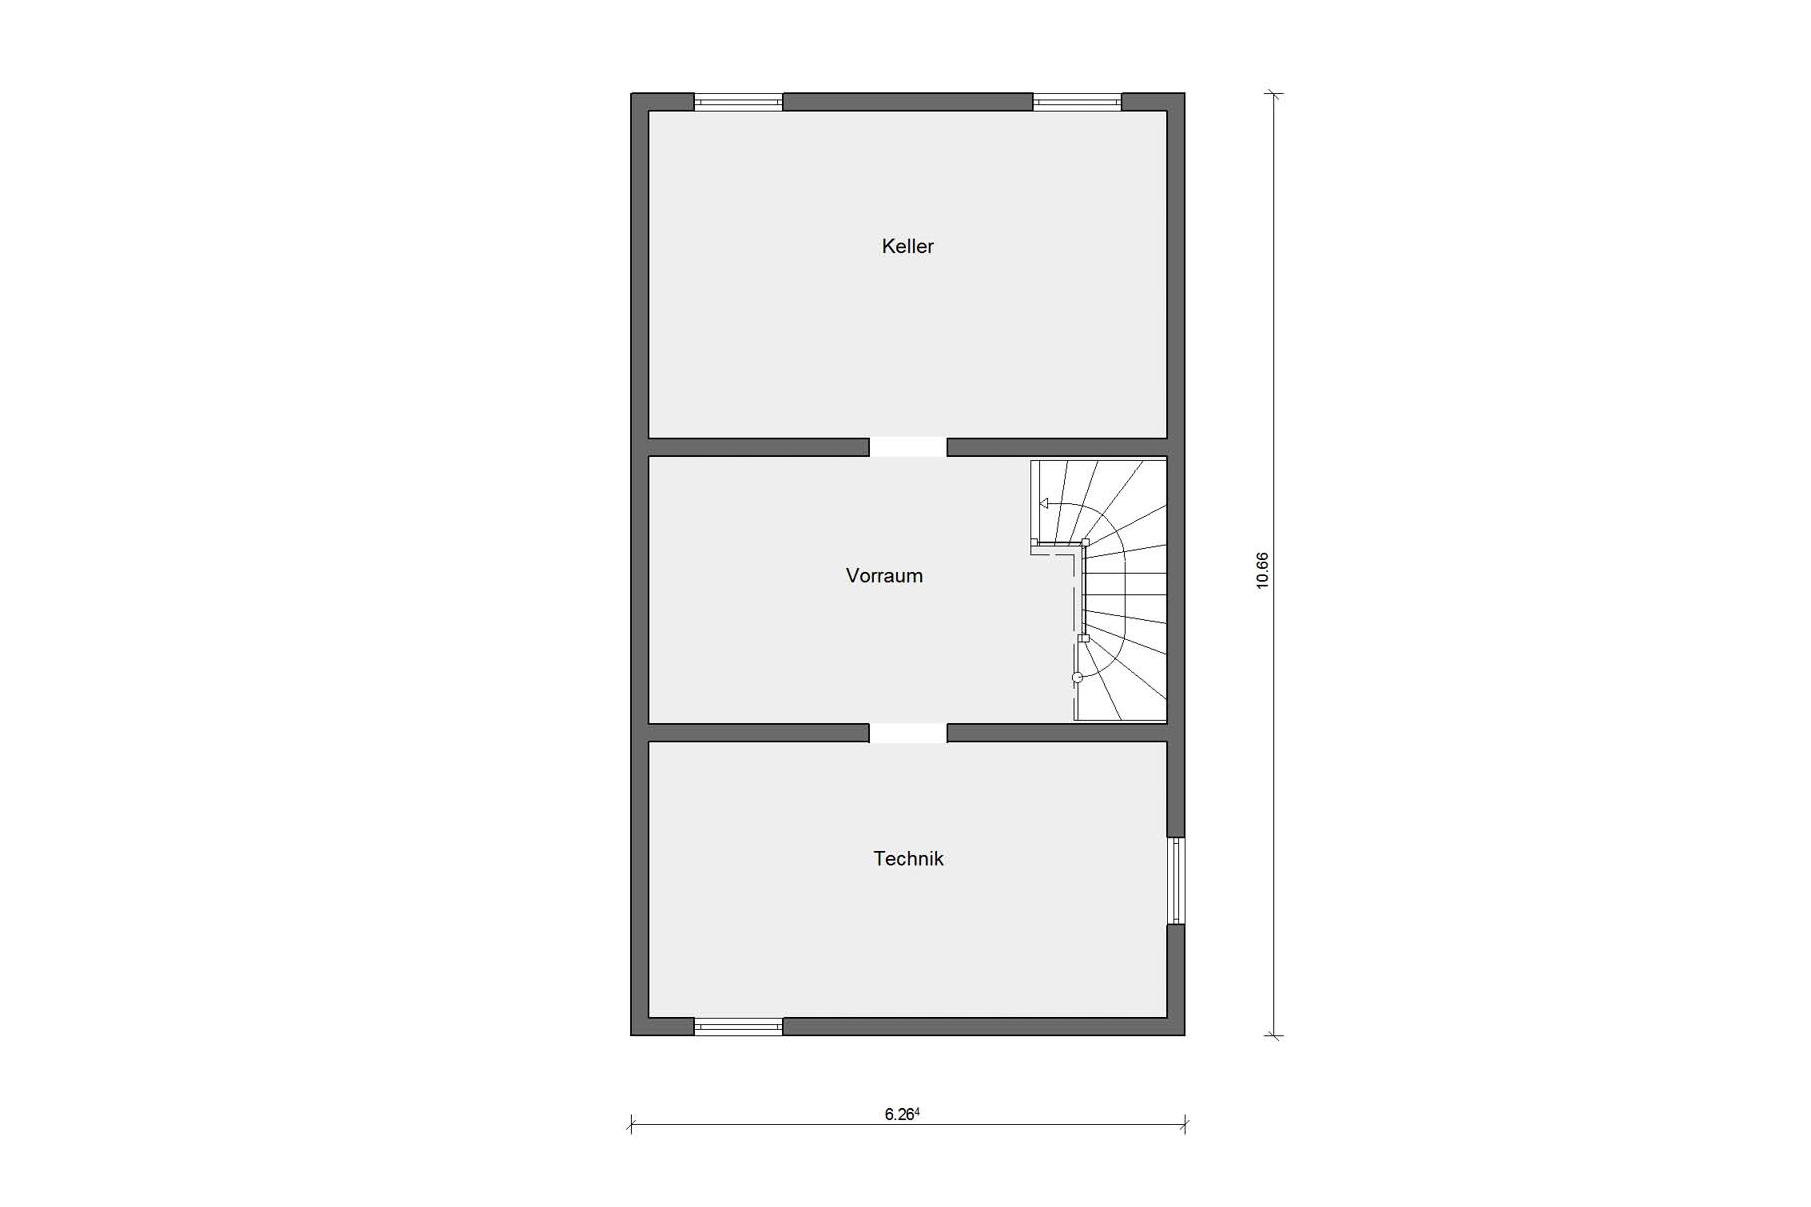 Floor plan basement E 20-116.1 chain house